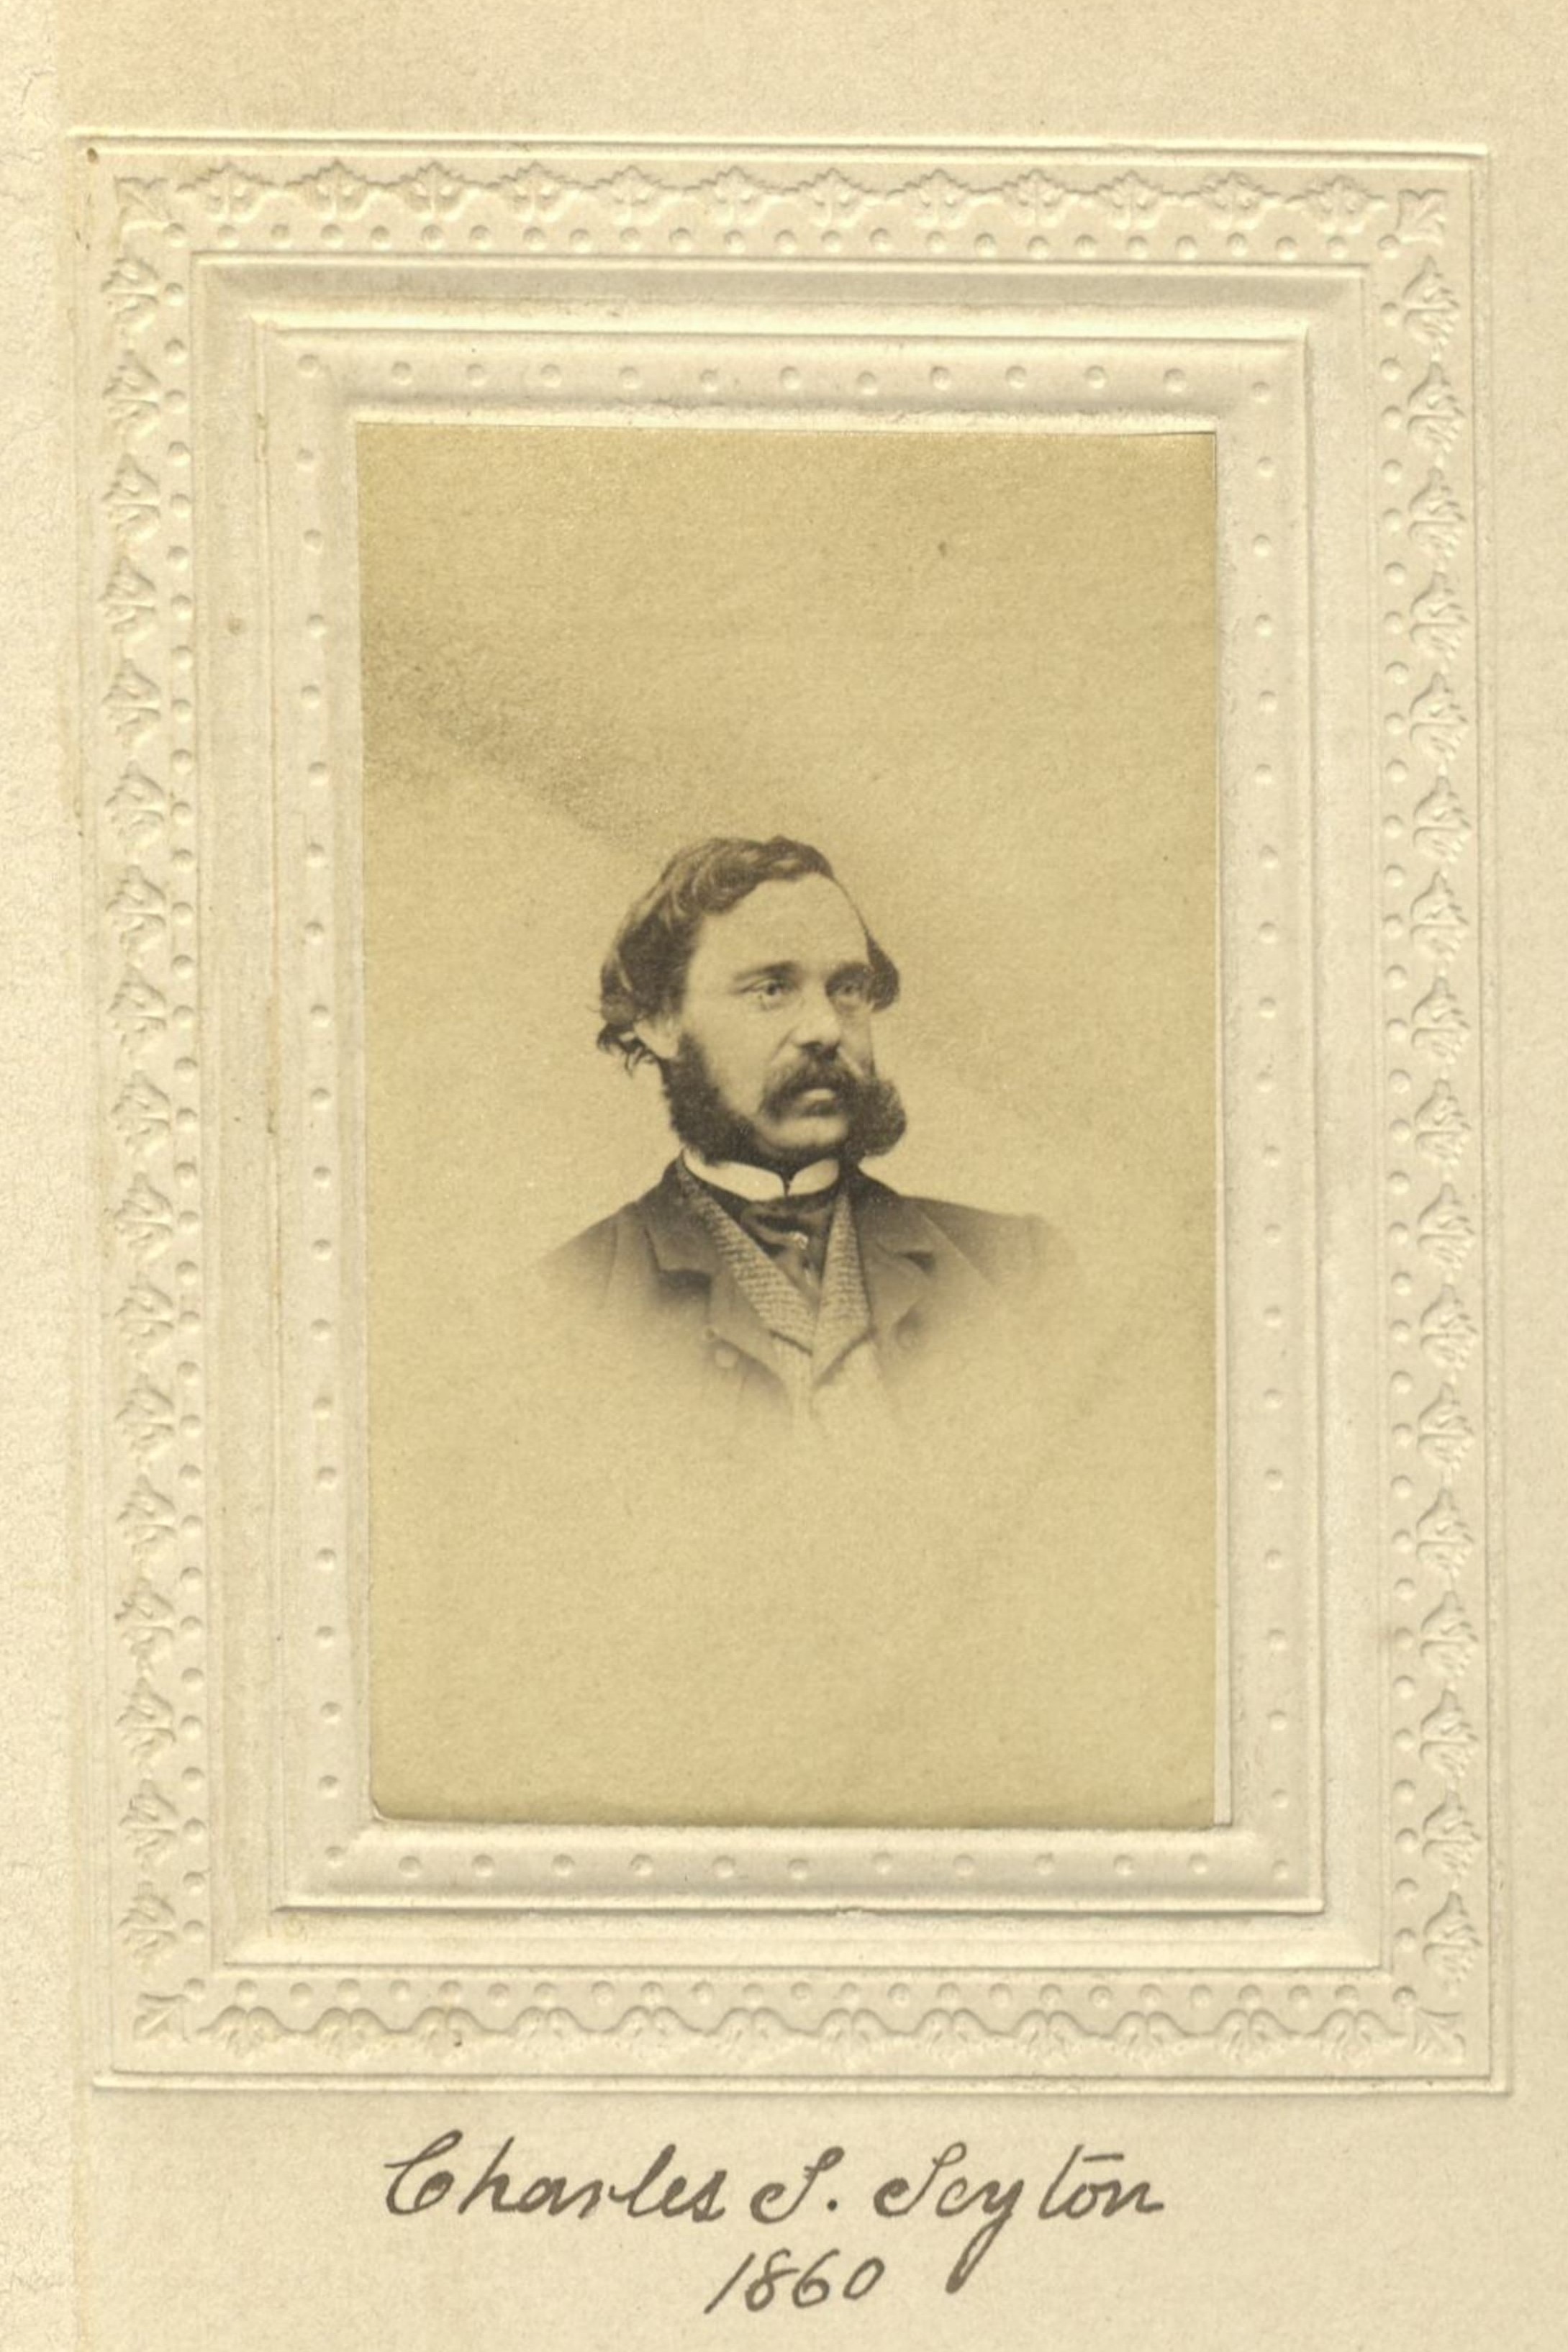 Member portrait of Charles S. Seyton